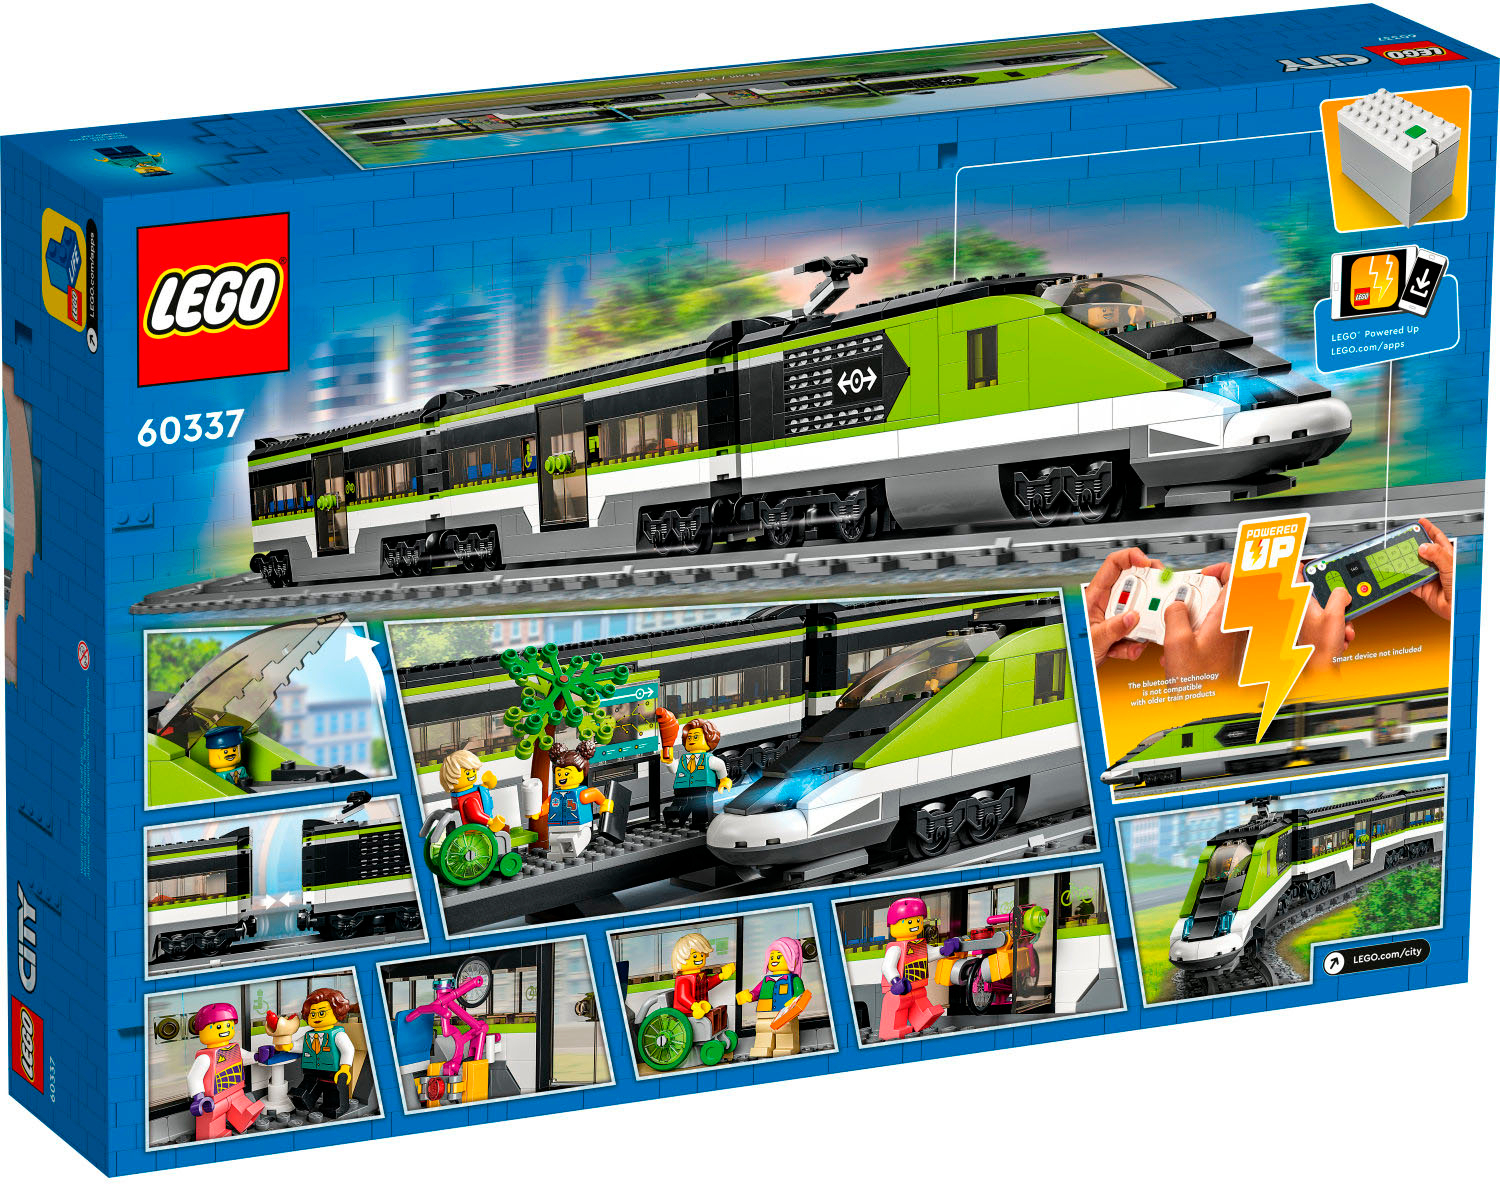 LEGO City Express Passenger Train 60337 6379646 - Buy